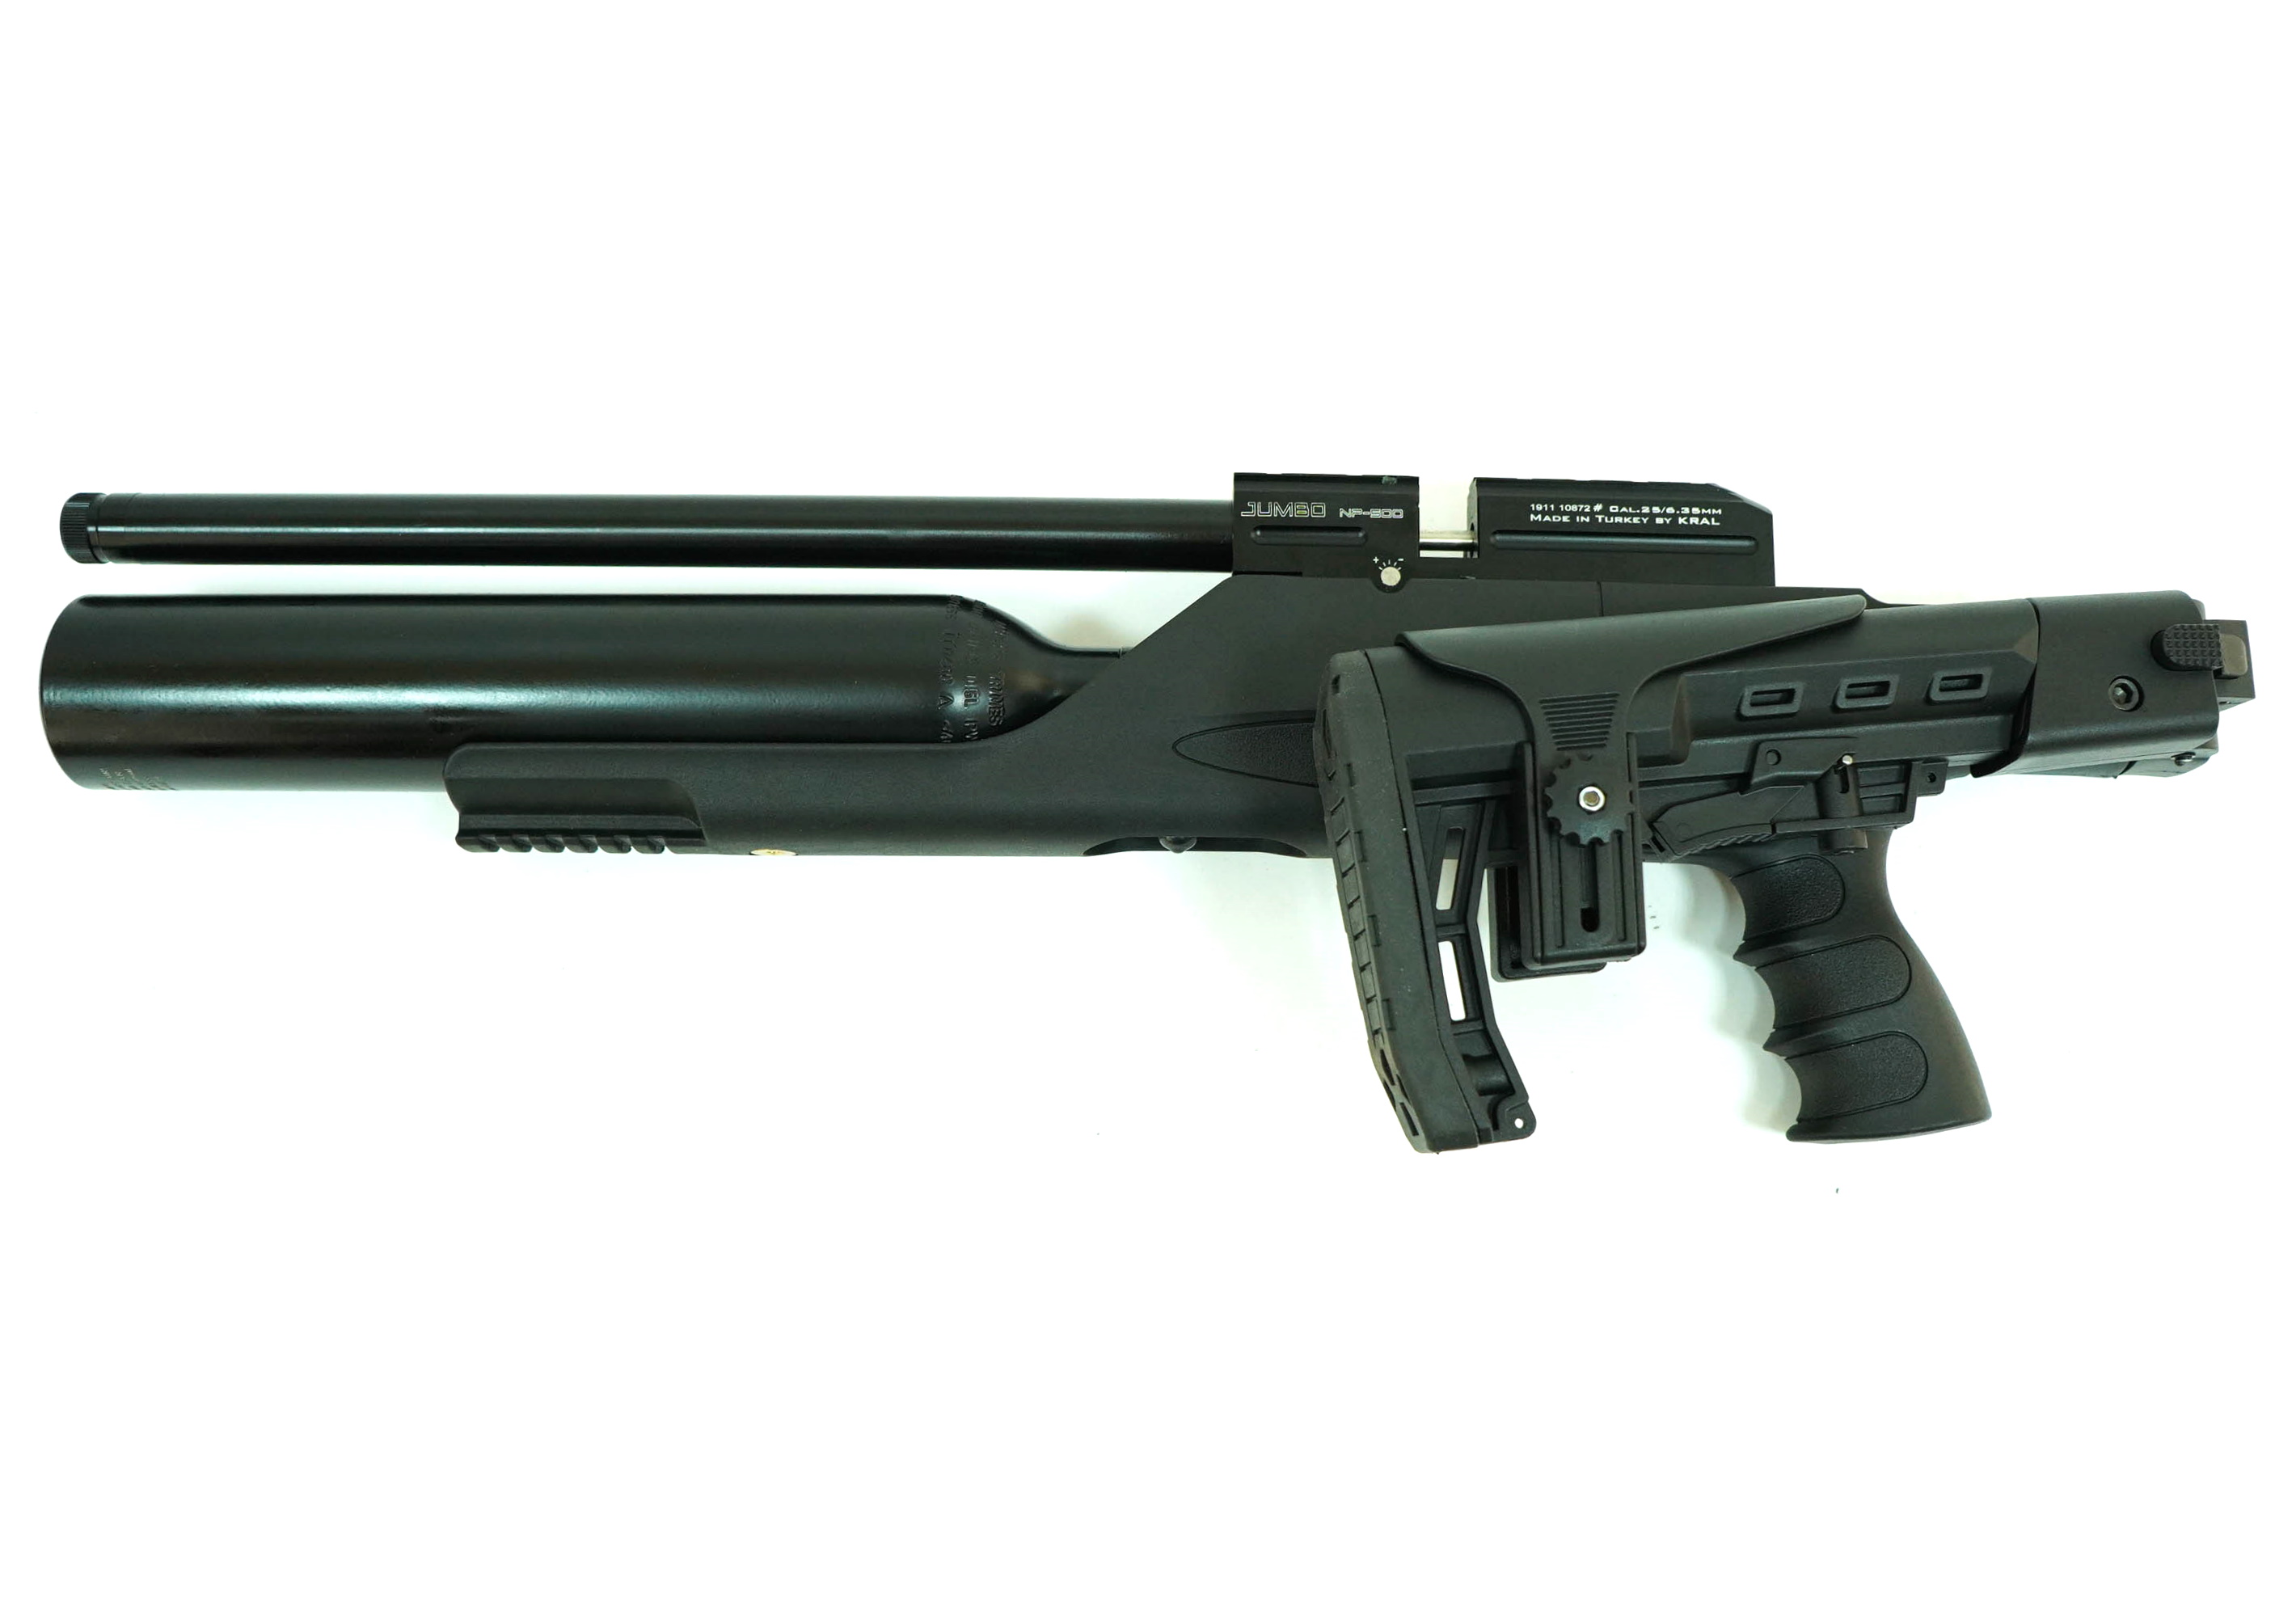 Кради рср. Винтовка PCP Kral Puncher. Kral Puncher Jumbo NP-500 6 35 мм. Пневматическая винтовка Kral Puncher Maxi 3. Kral Puncher Jumbo Maxi NP-500.